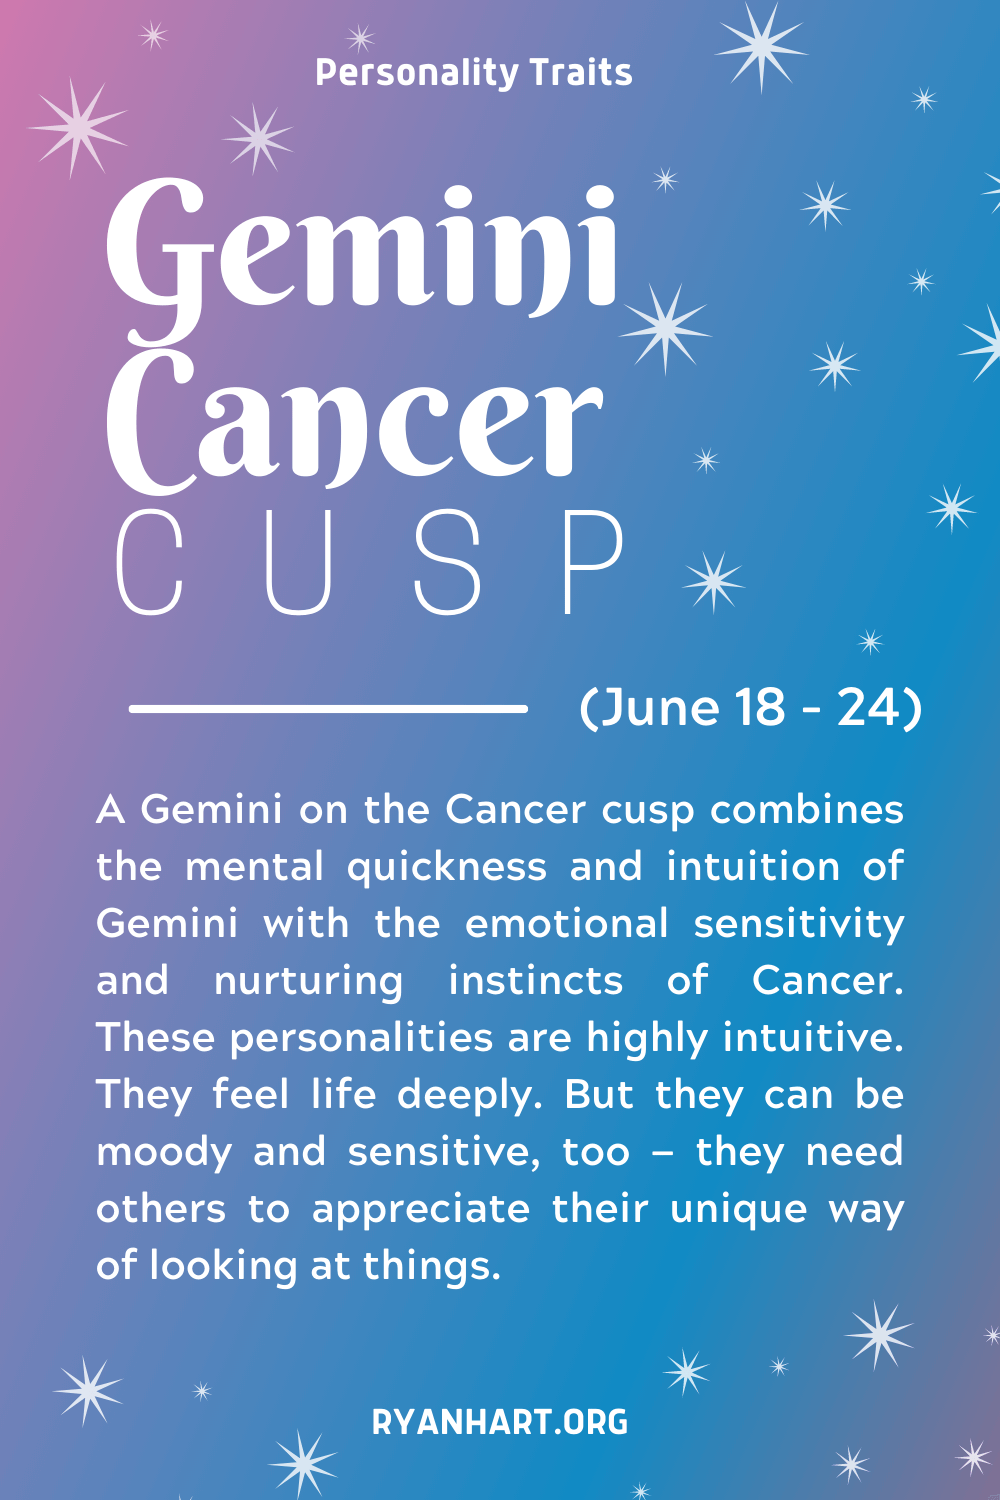  Gemini Cancer Cusp Personecaj Trajtoj